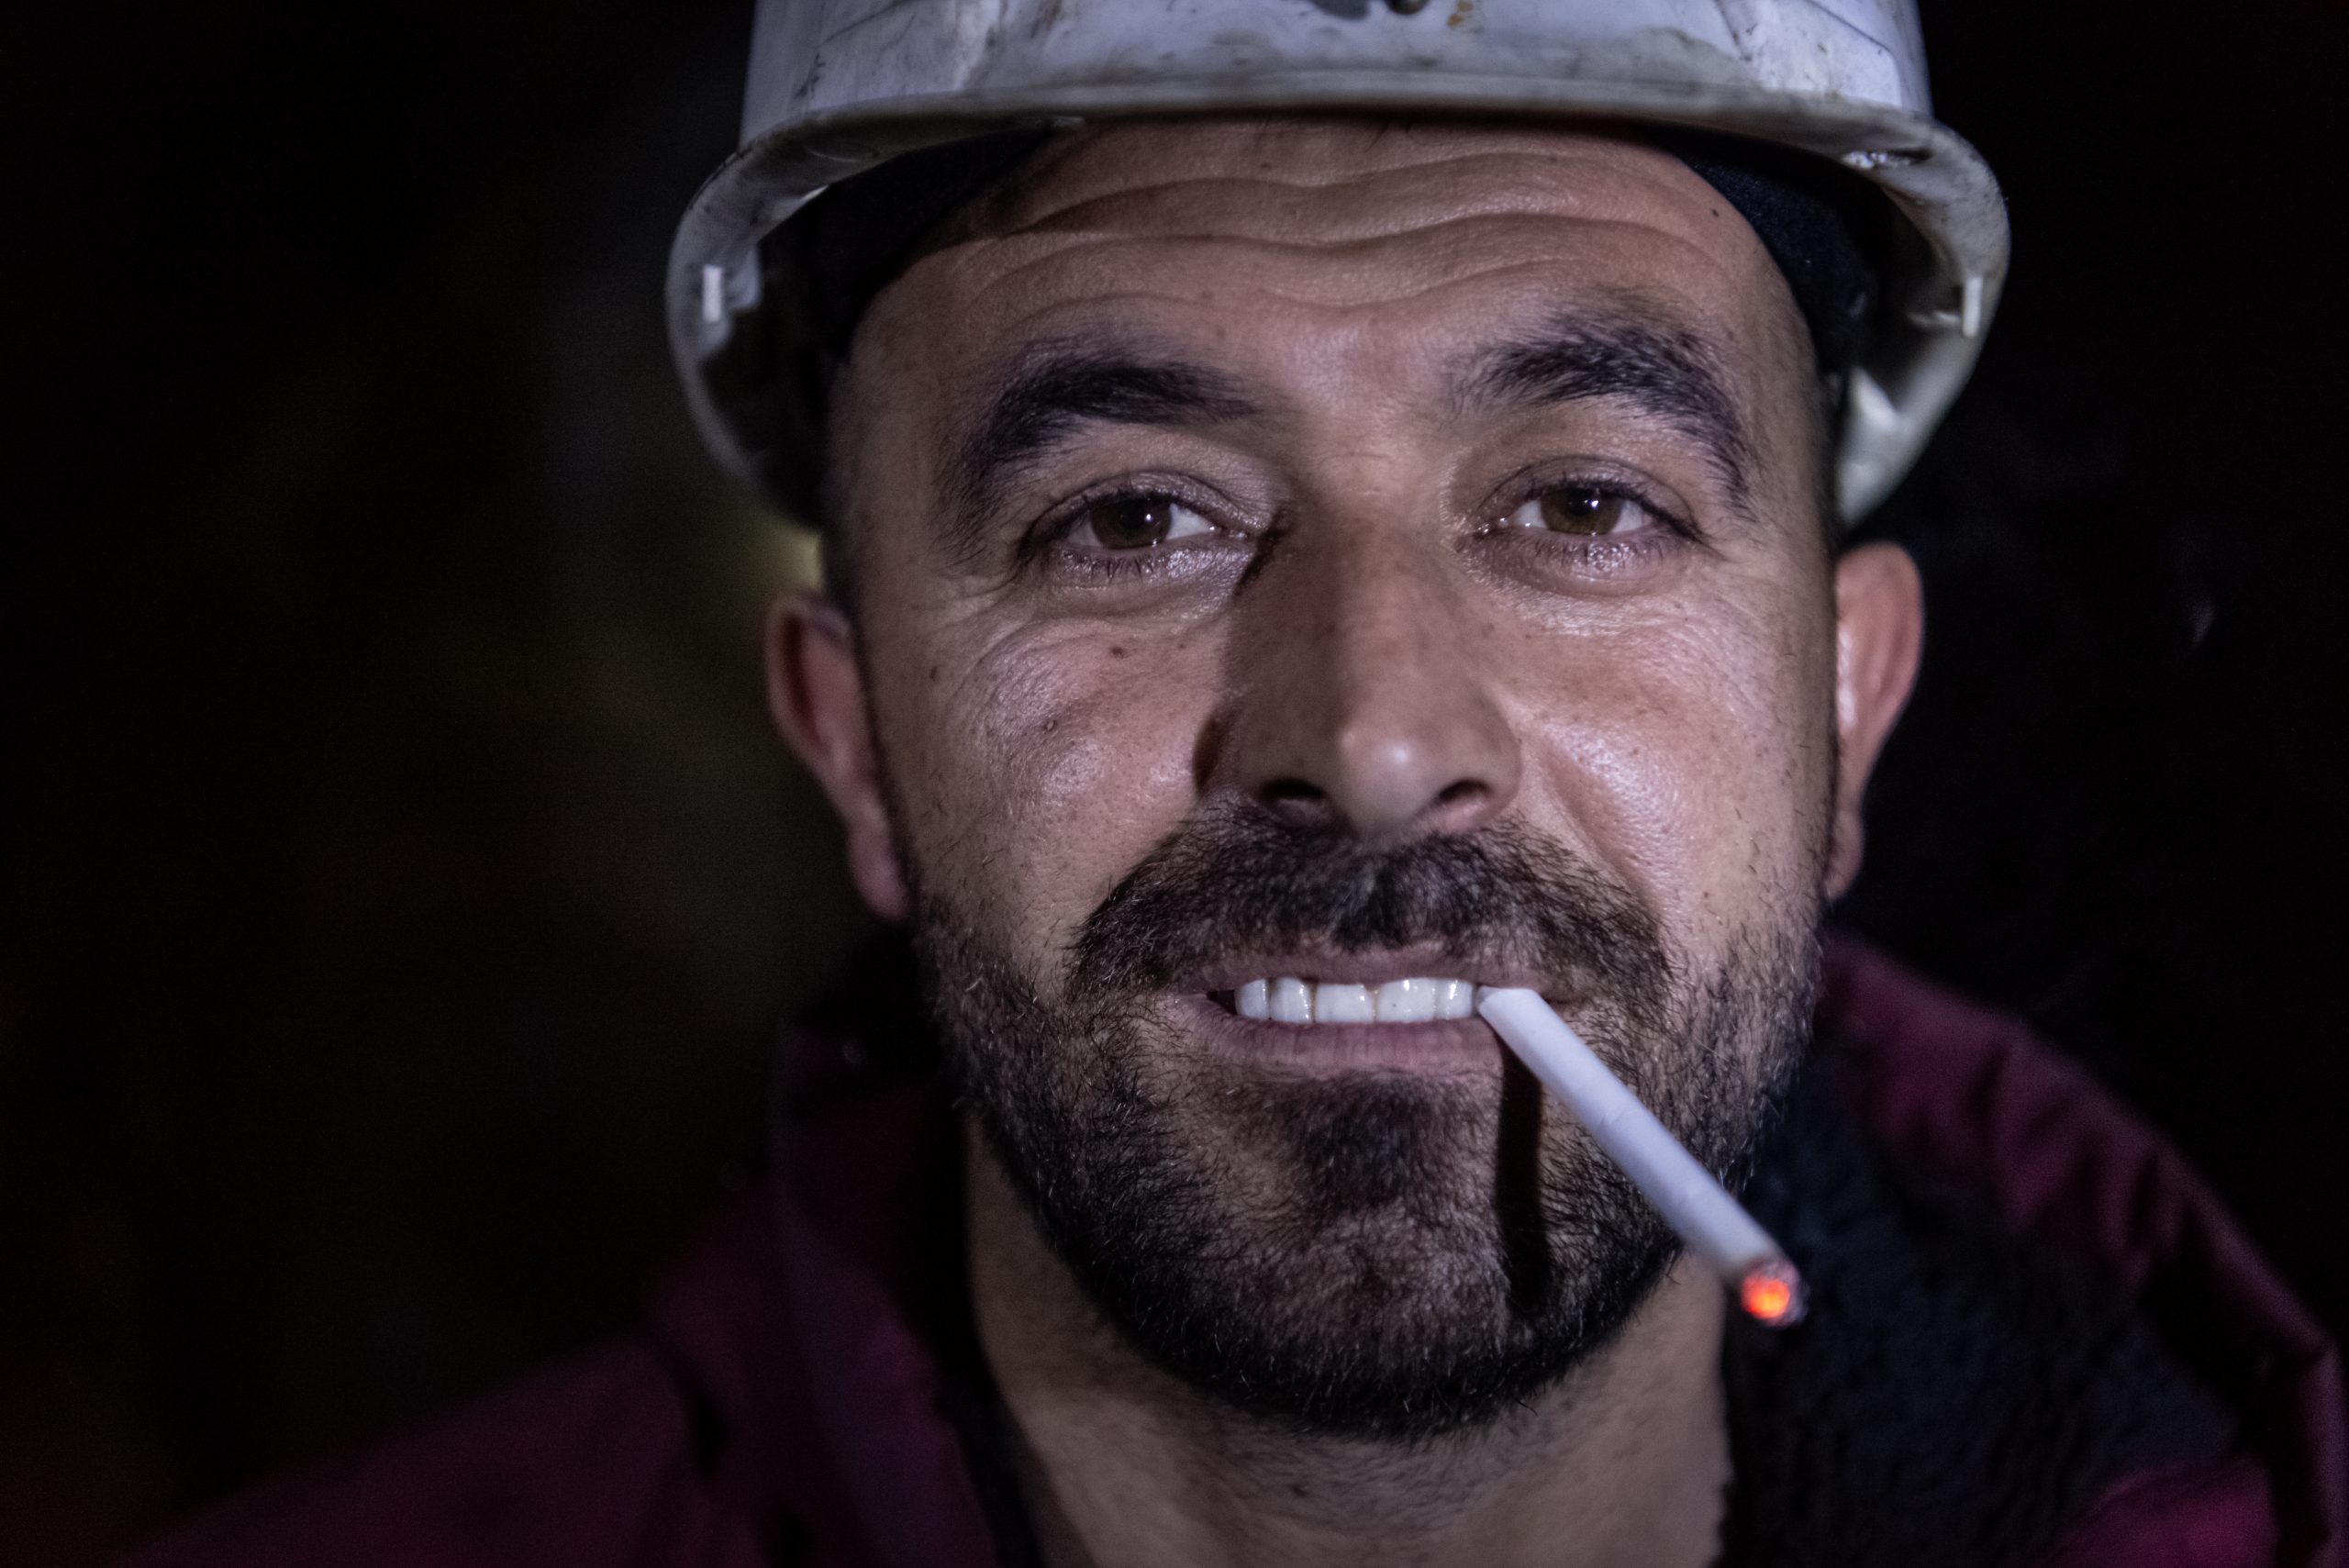 39-year-old Dritan Sadiku, a Trepça miner, at work on the 10th underground level of the Trepça mining facilities in Stan Terg.